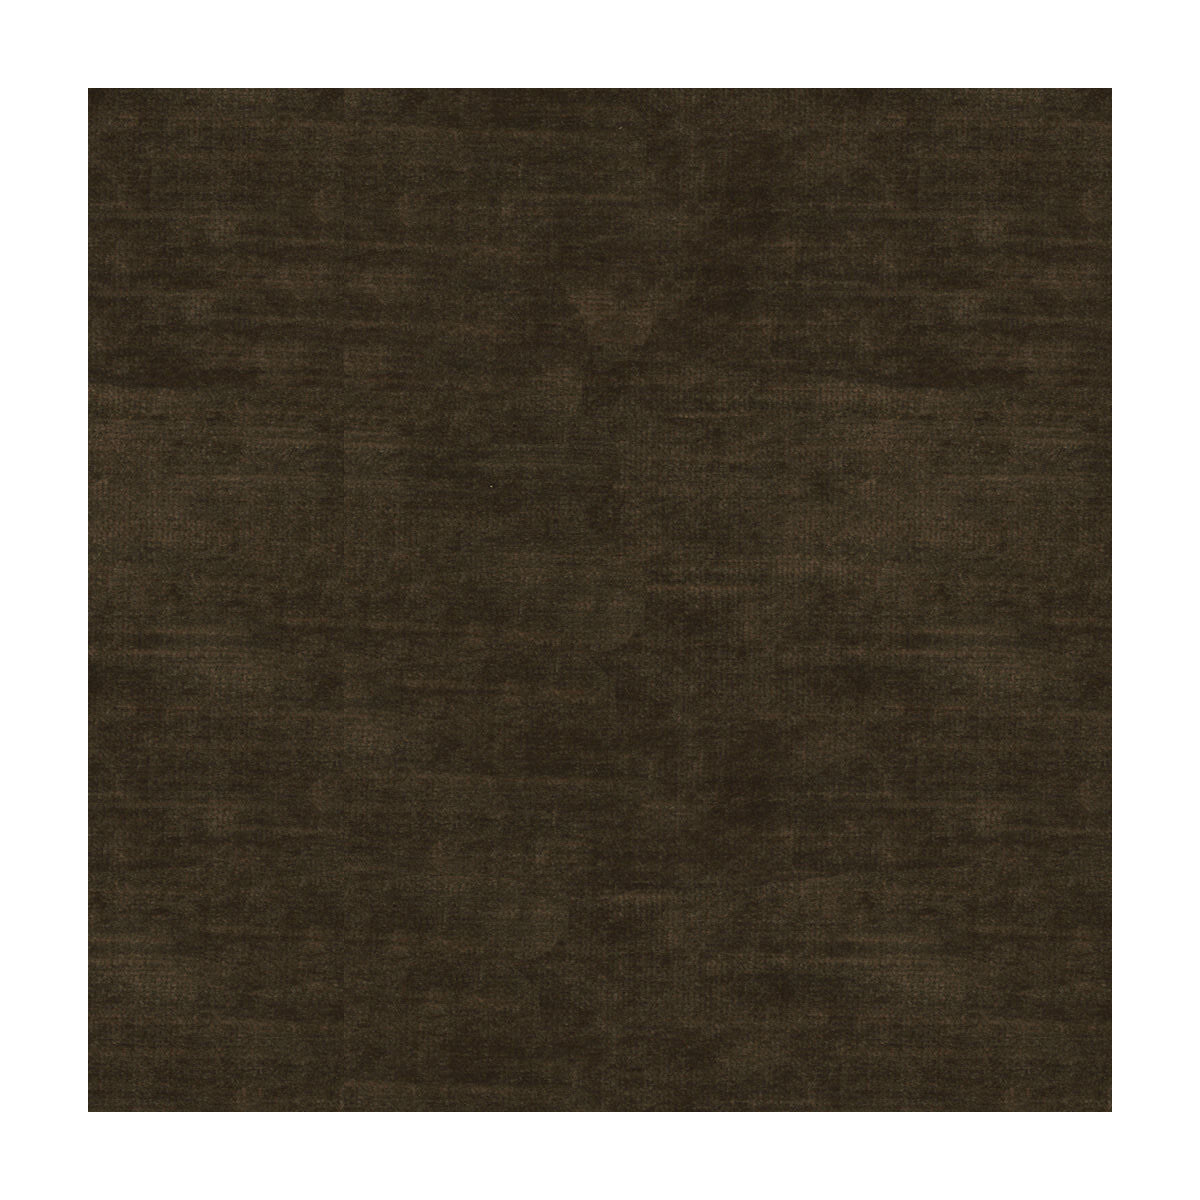 Lazare Velvet fabric in espresso color - pattern 8016103.66.0 - by Brunschwig &amp; Fils